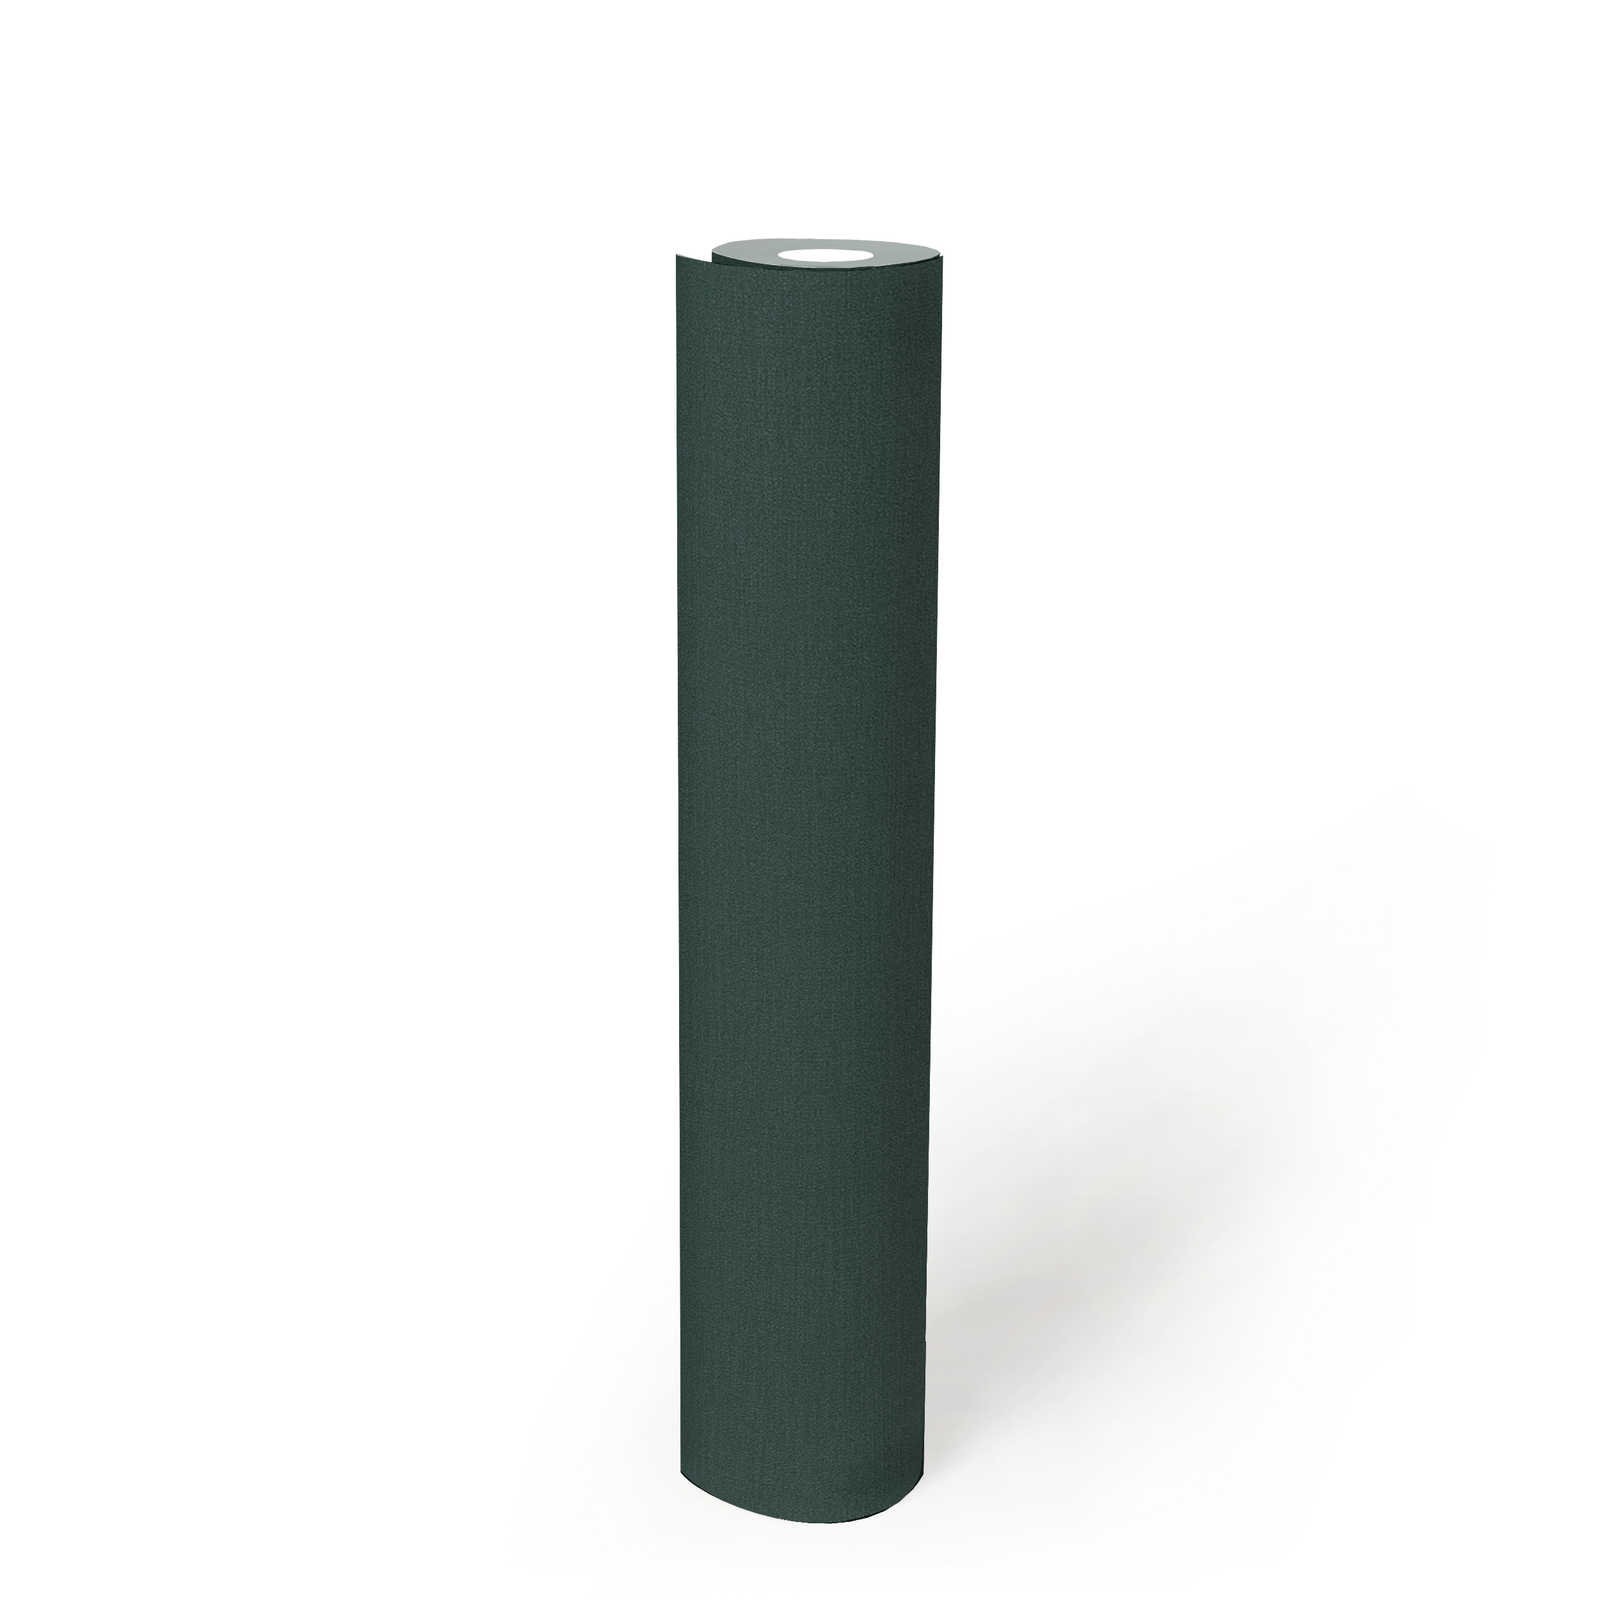             Einfarbige Unitapete in dunkler Farbe – Petrol, Grün
        